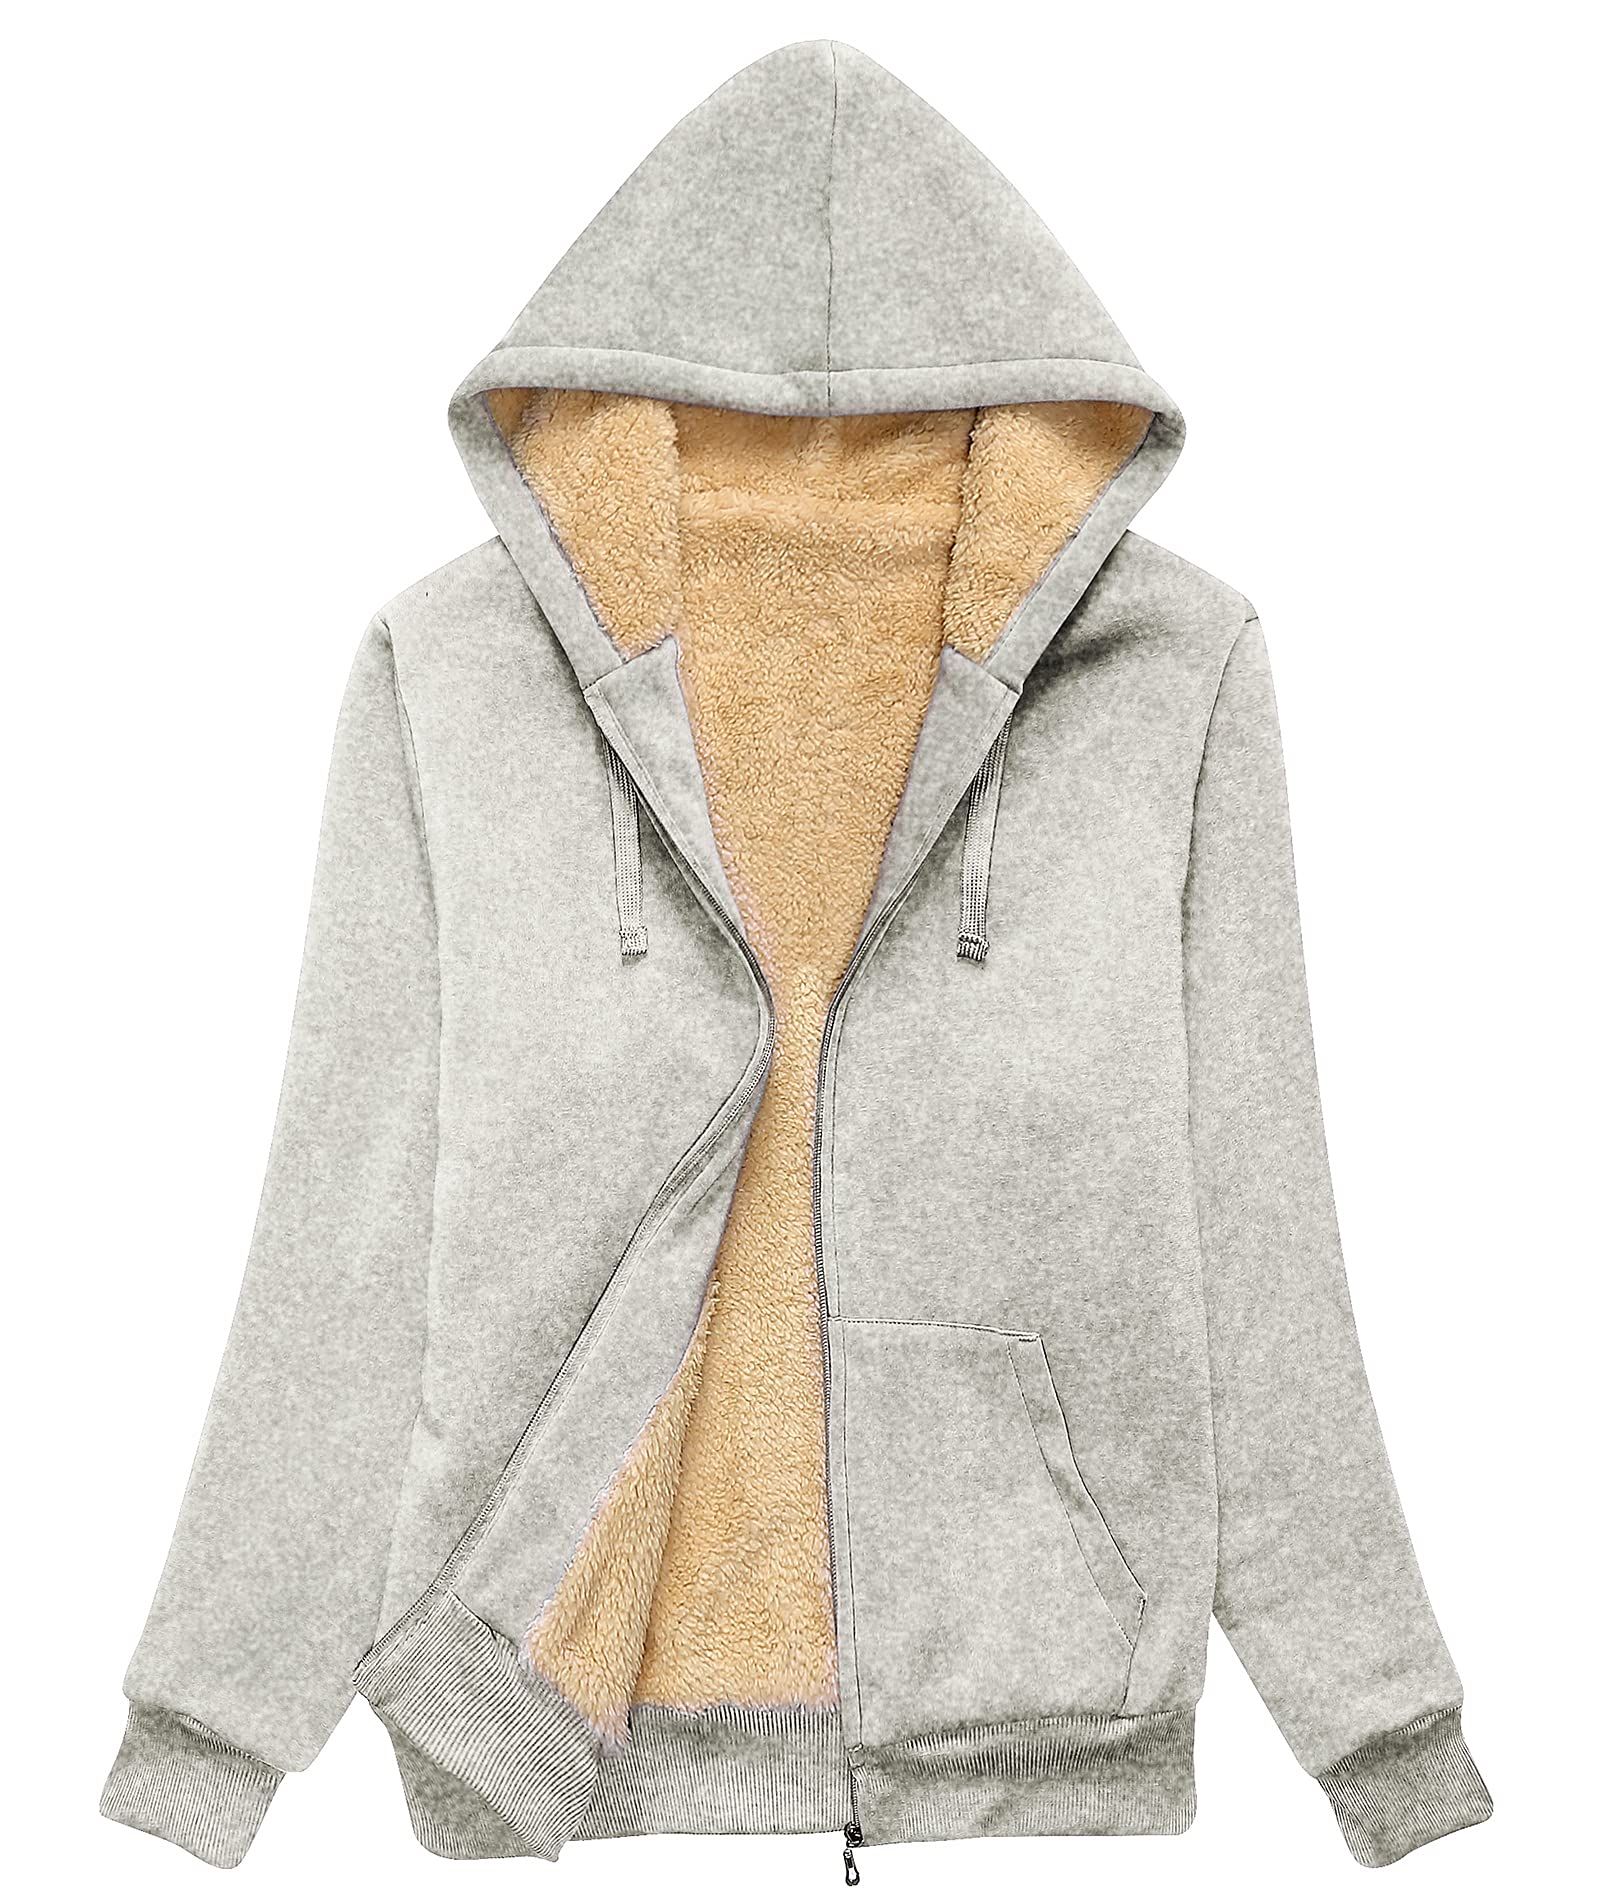 SWISSWELL Hoodies for Women Winter Fleece Sweatshirt - Full Zip Up Thick Sherpa Lined | Amazon (US)